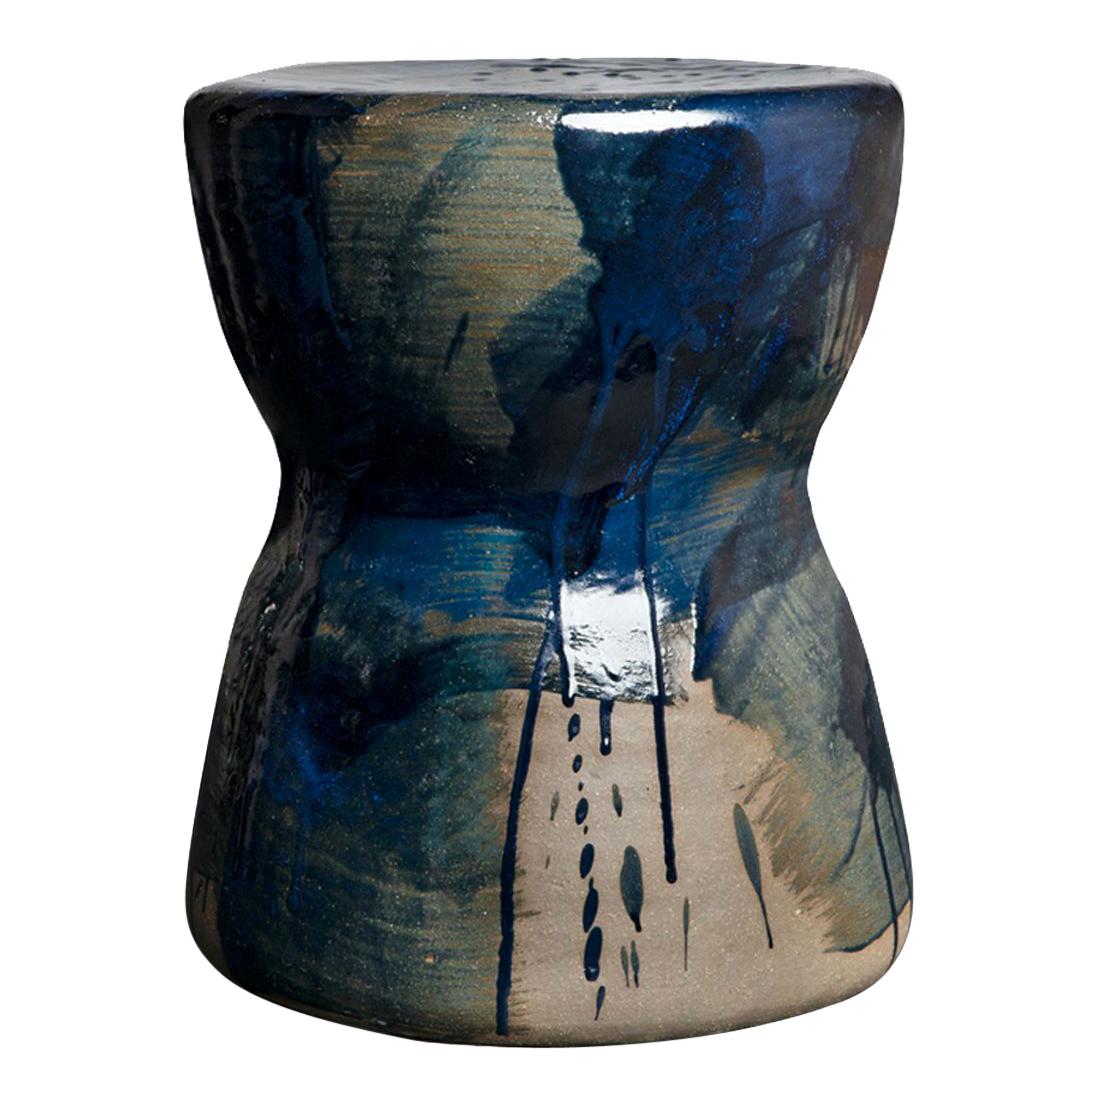 ST11 Glazed Stoneware Stool by Pascale Girardin